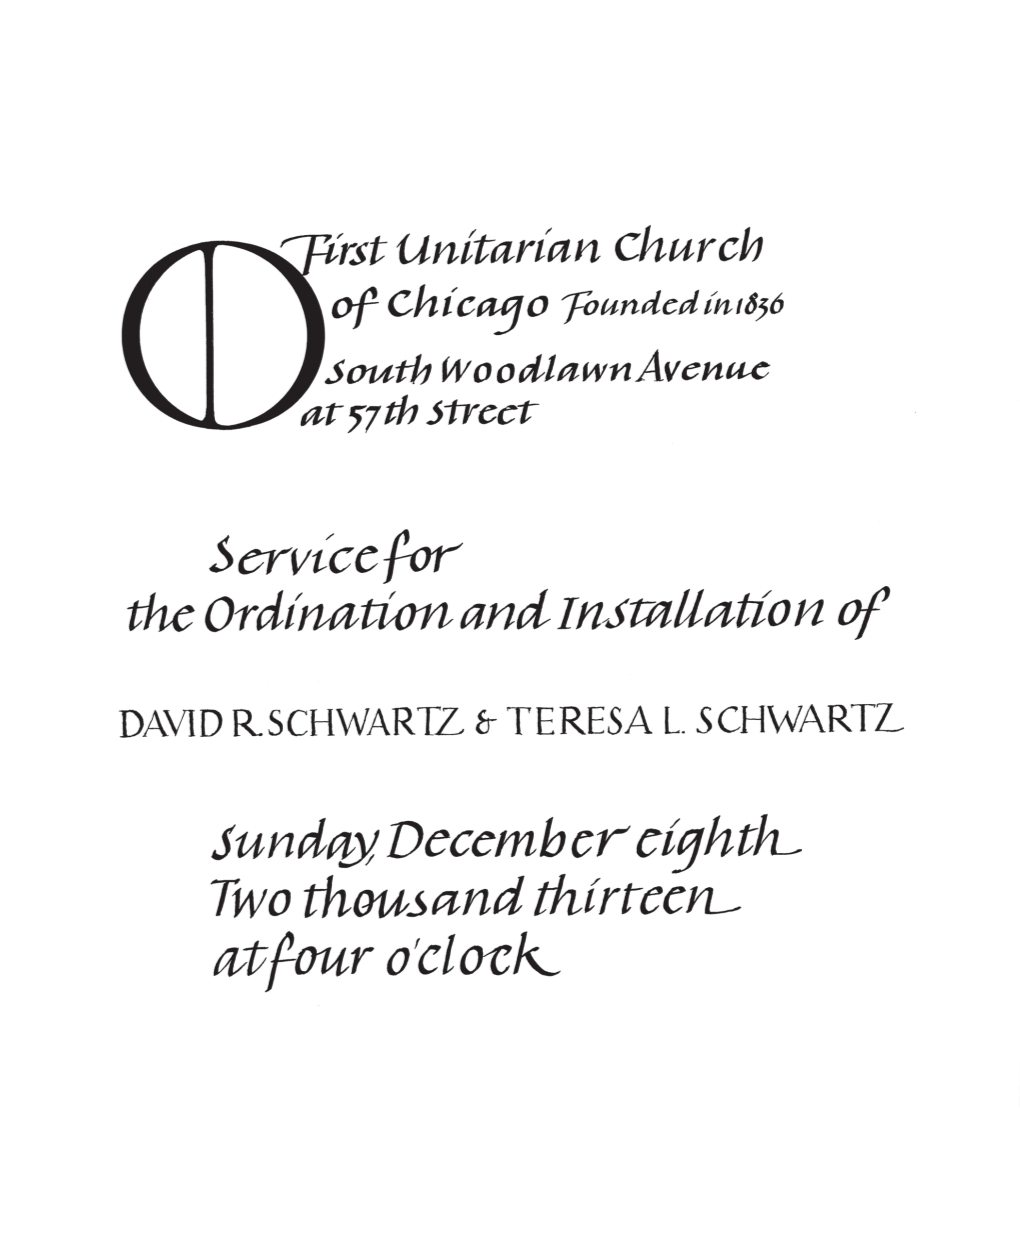 Revs. David and Teresa Schwartz